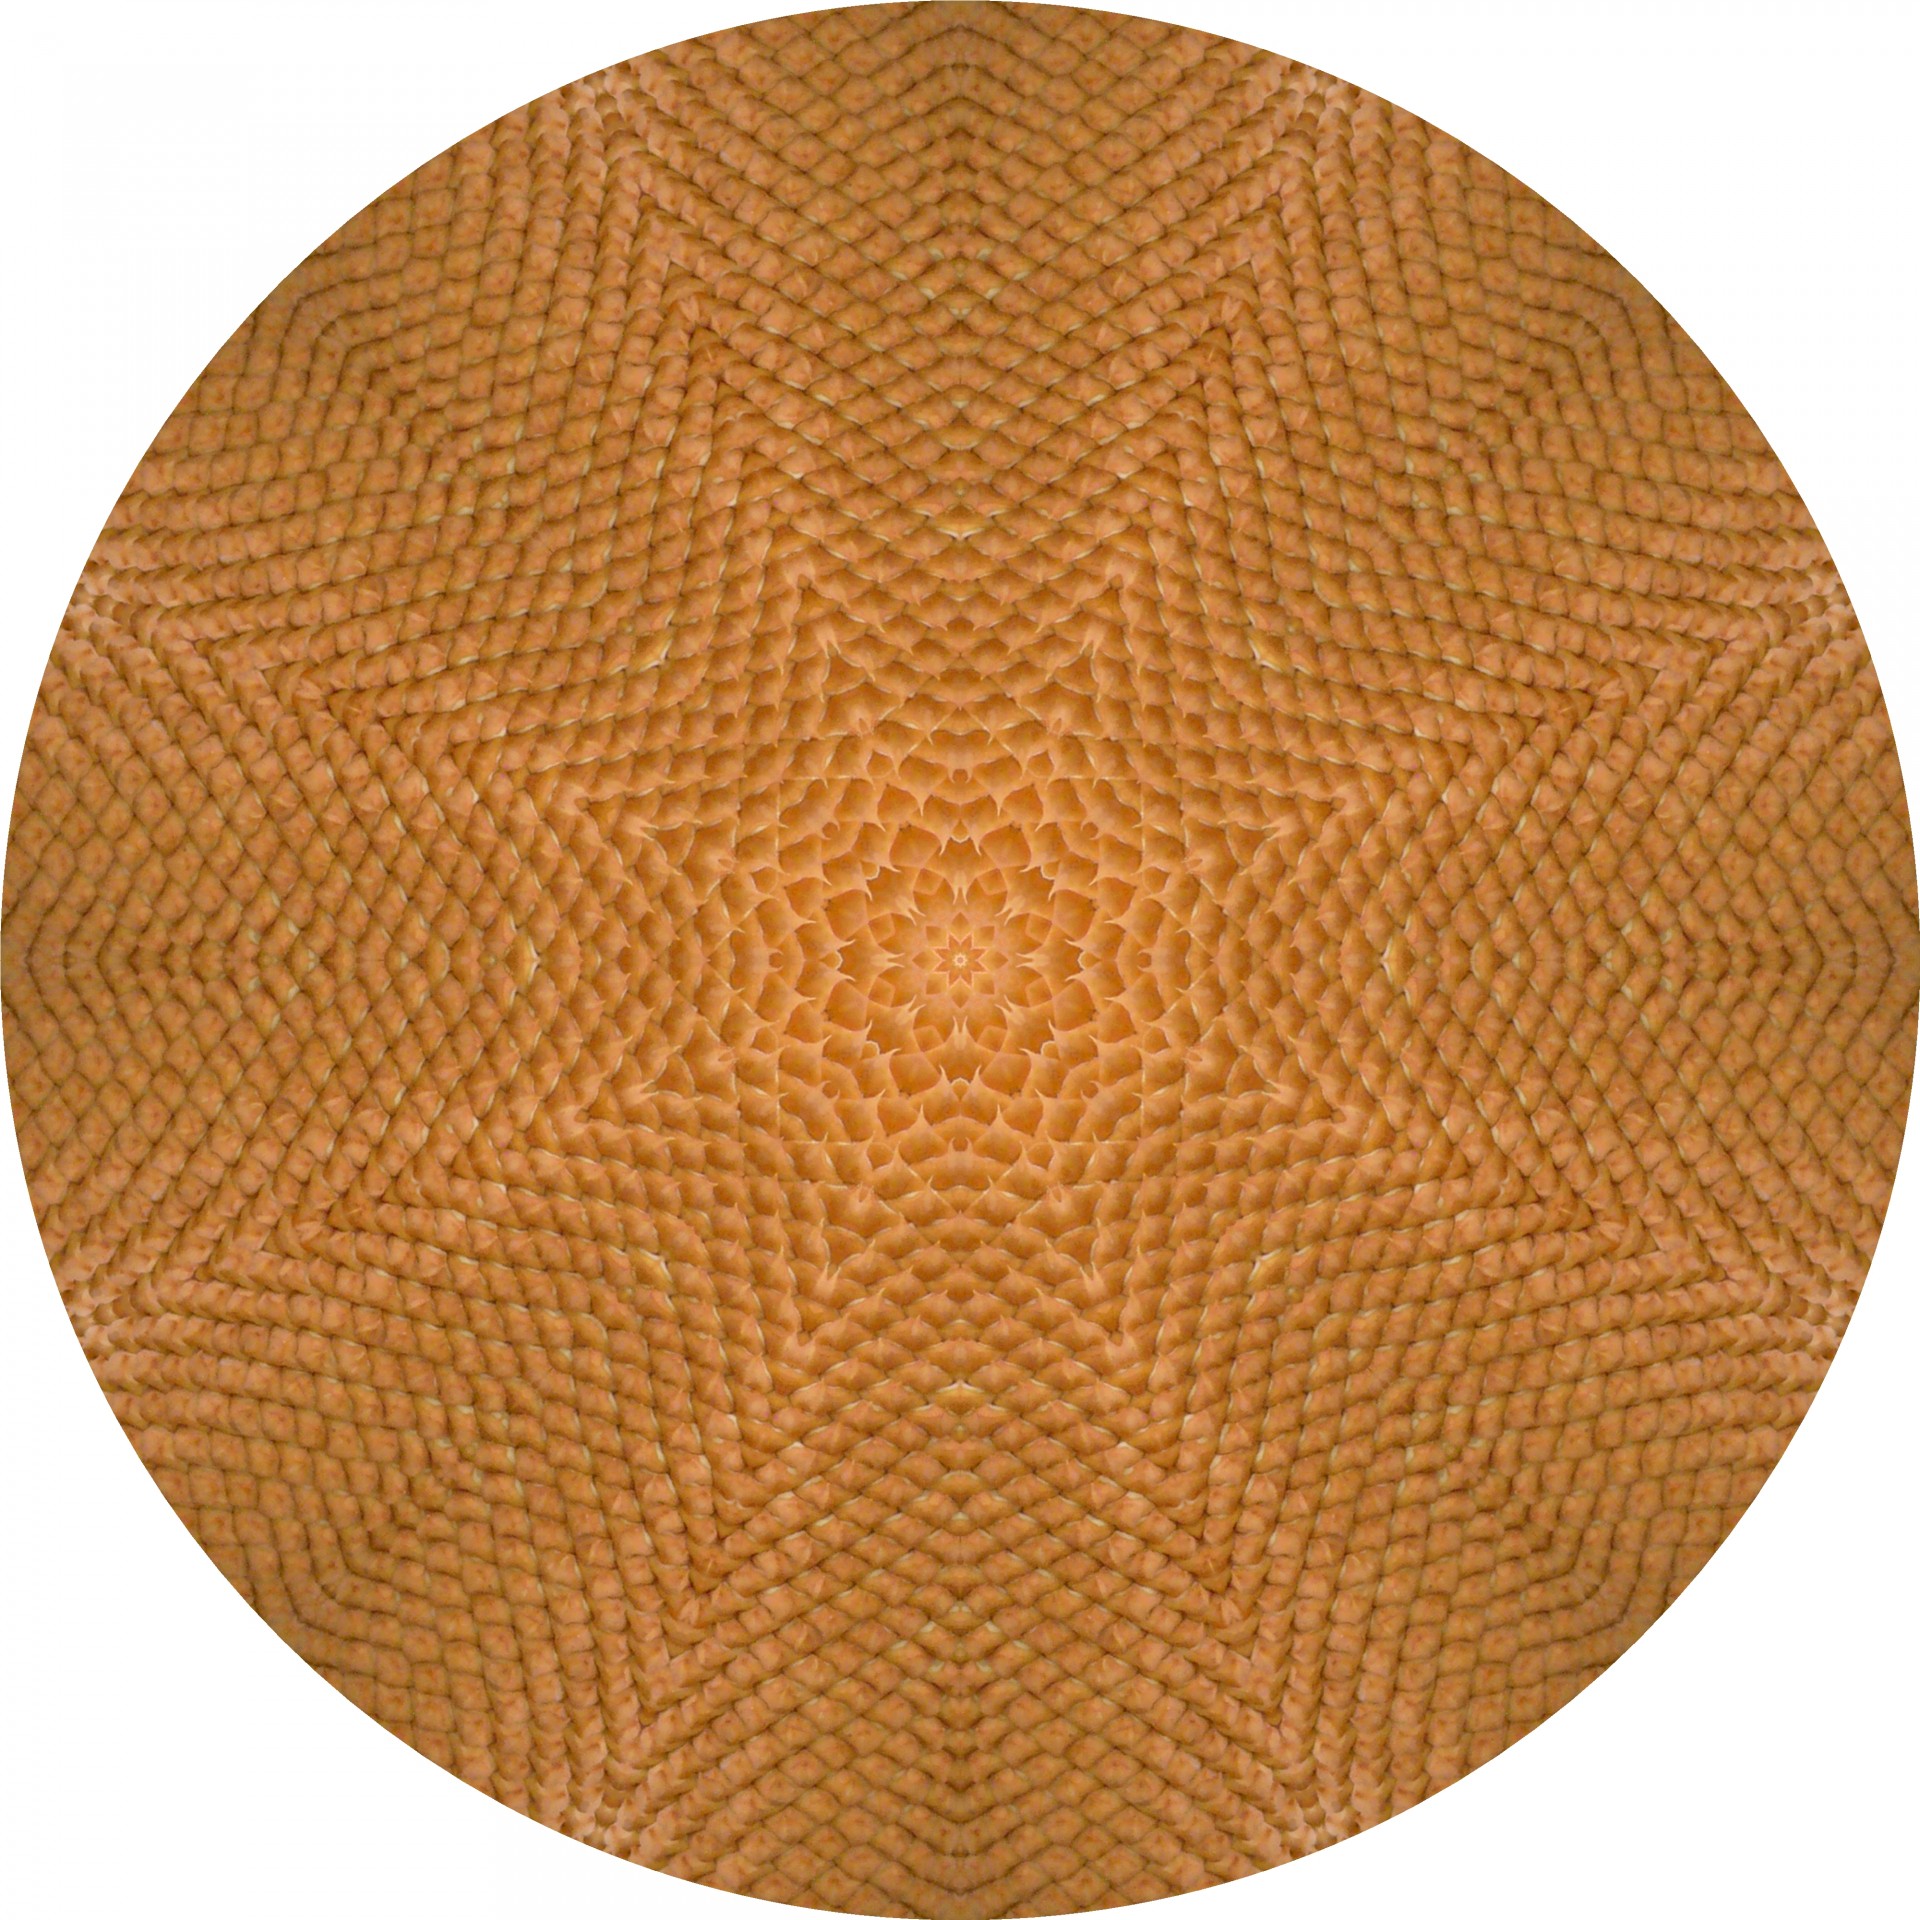 kaleidoscope kaleidoscopic design free photo